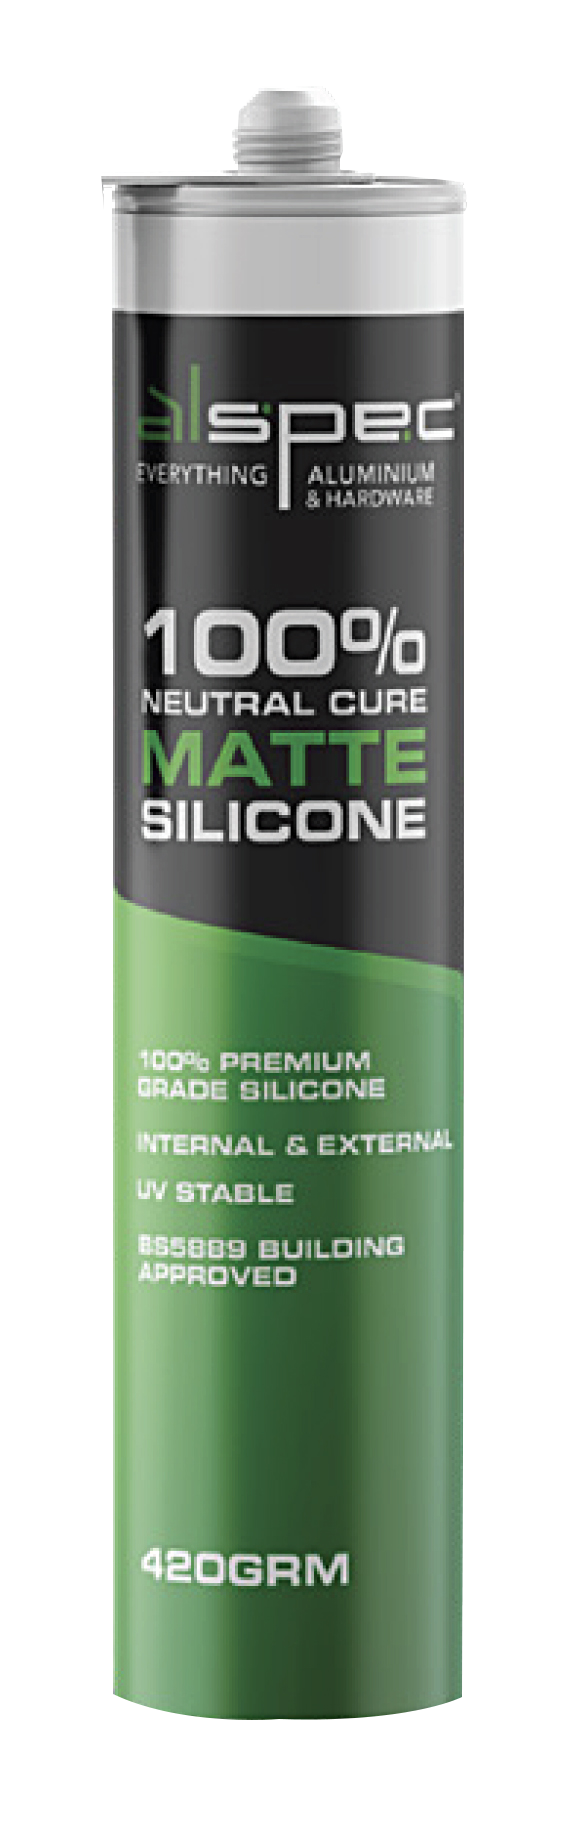 100% Matte Neutral Cure Silicone